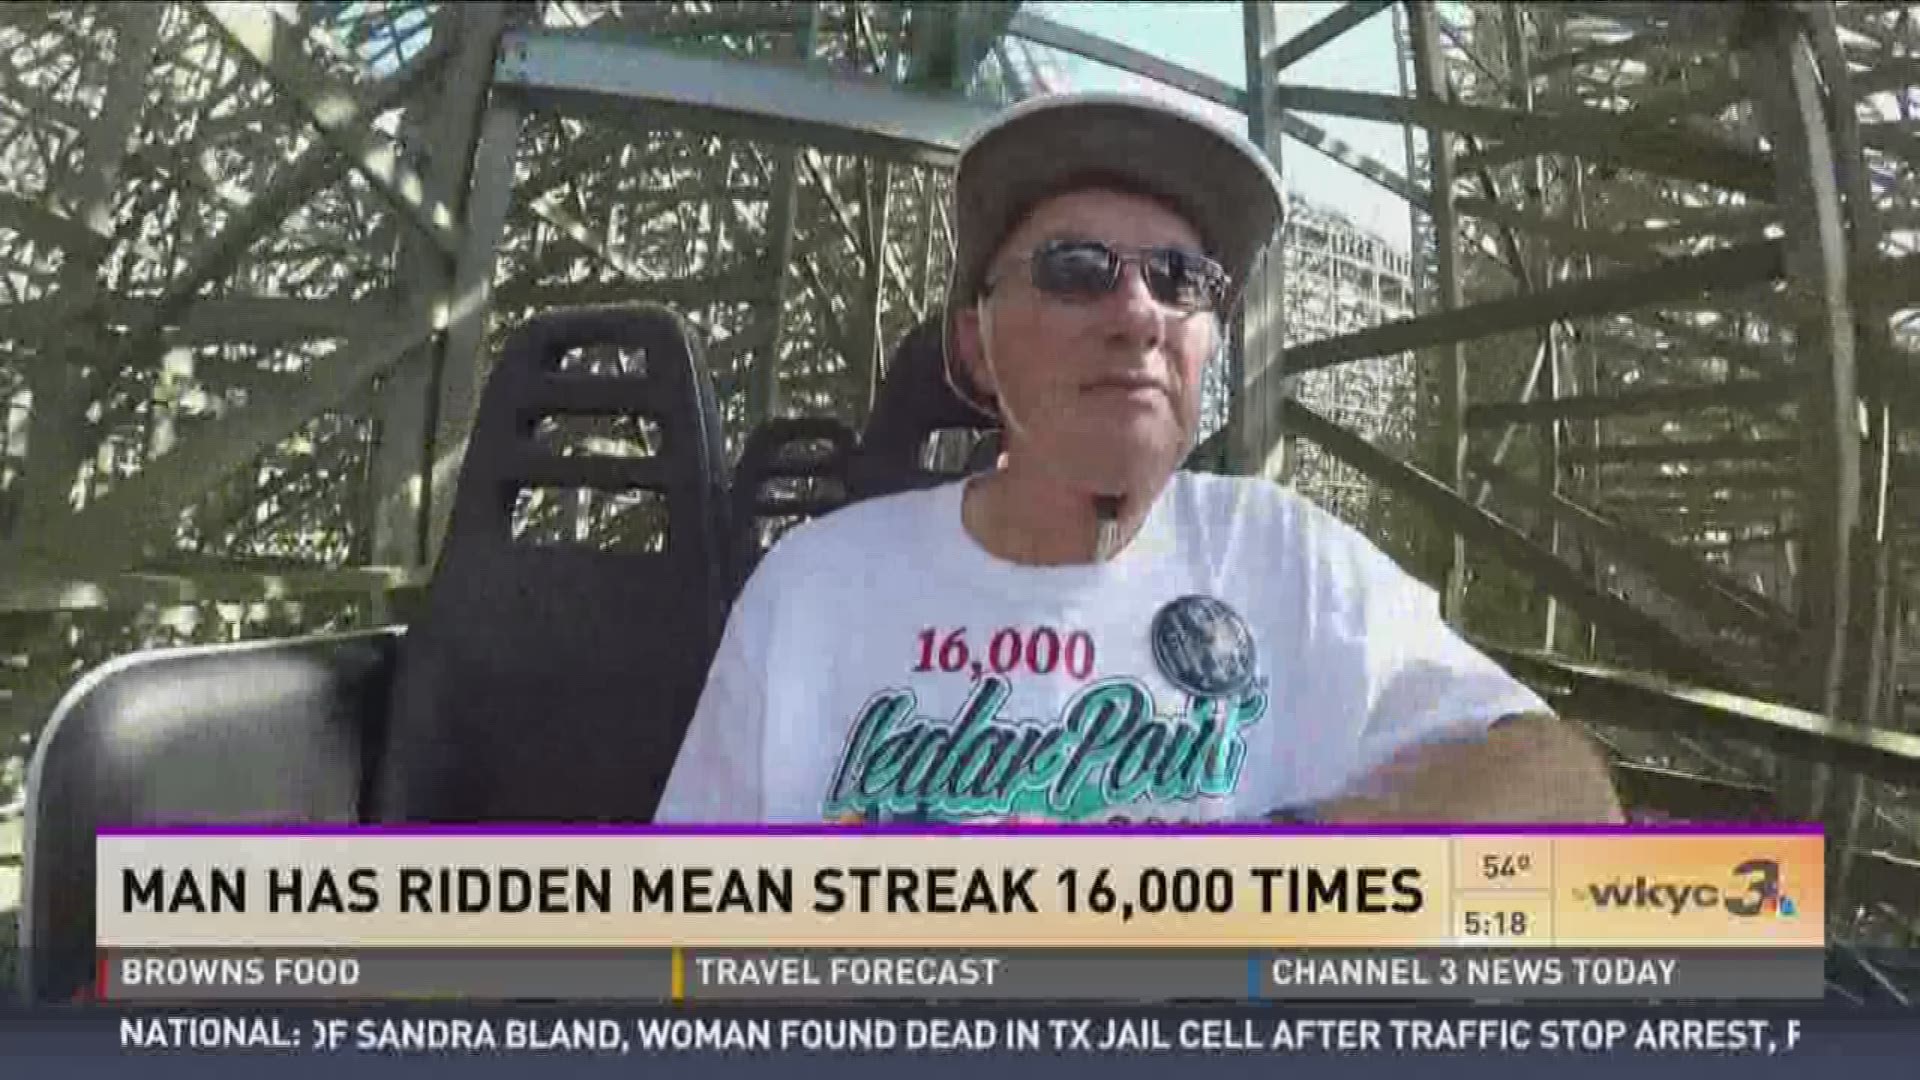 Sept. 16, 2016: Cedar Point superfan 'Mean Streak Henry' rides the coaster 16,000 times.